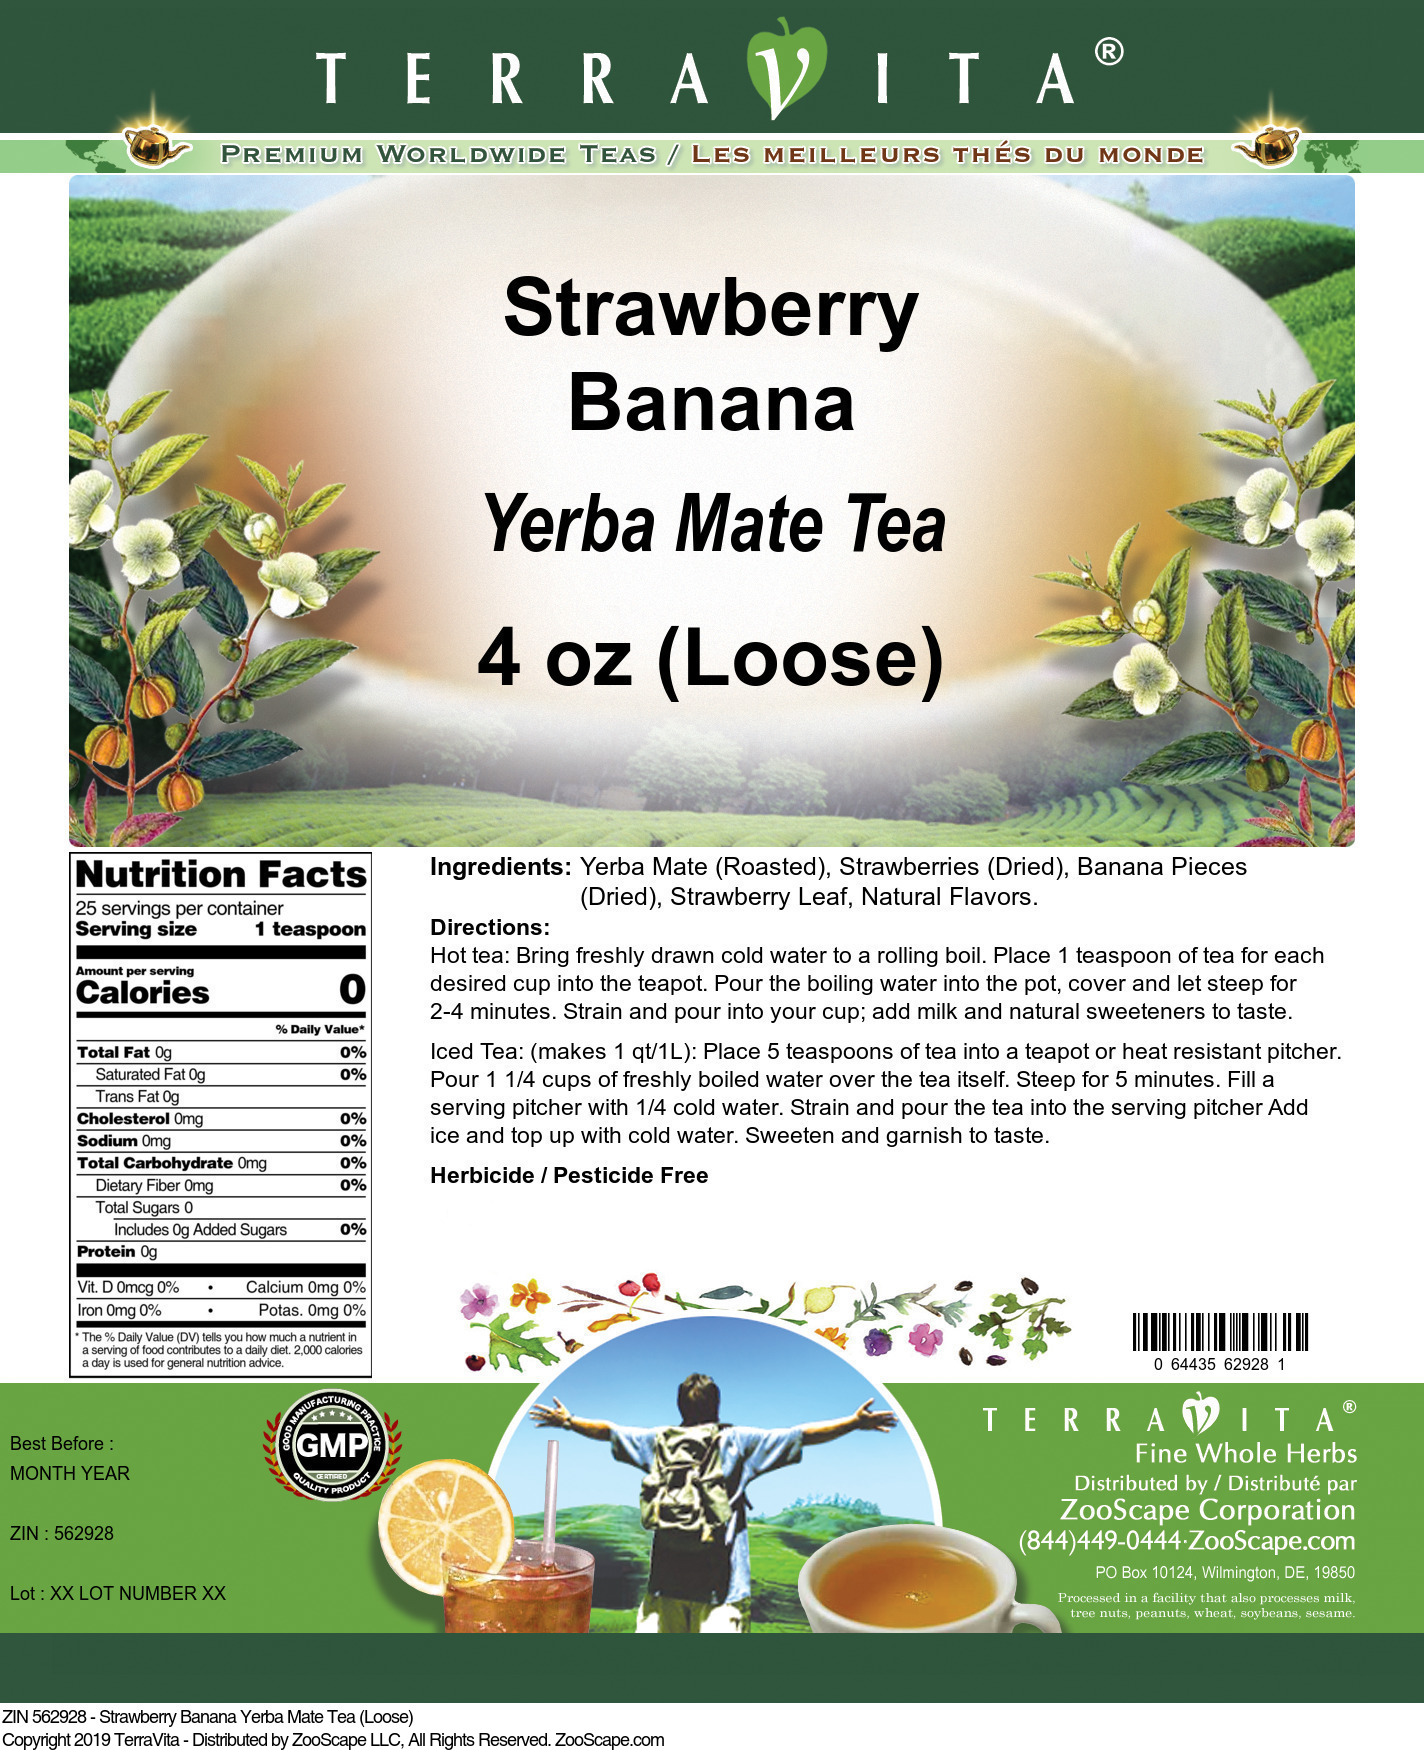 Strawberry Banana Yerba Mate Tea (Loose) - Label